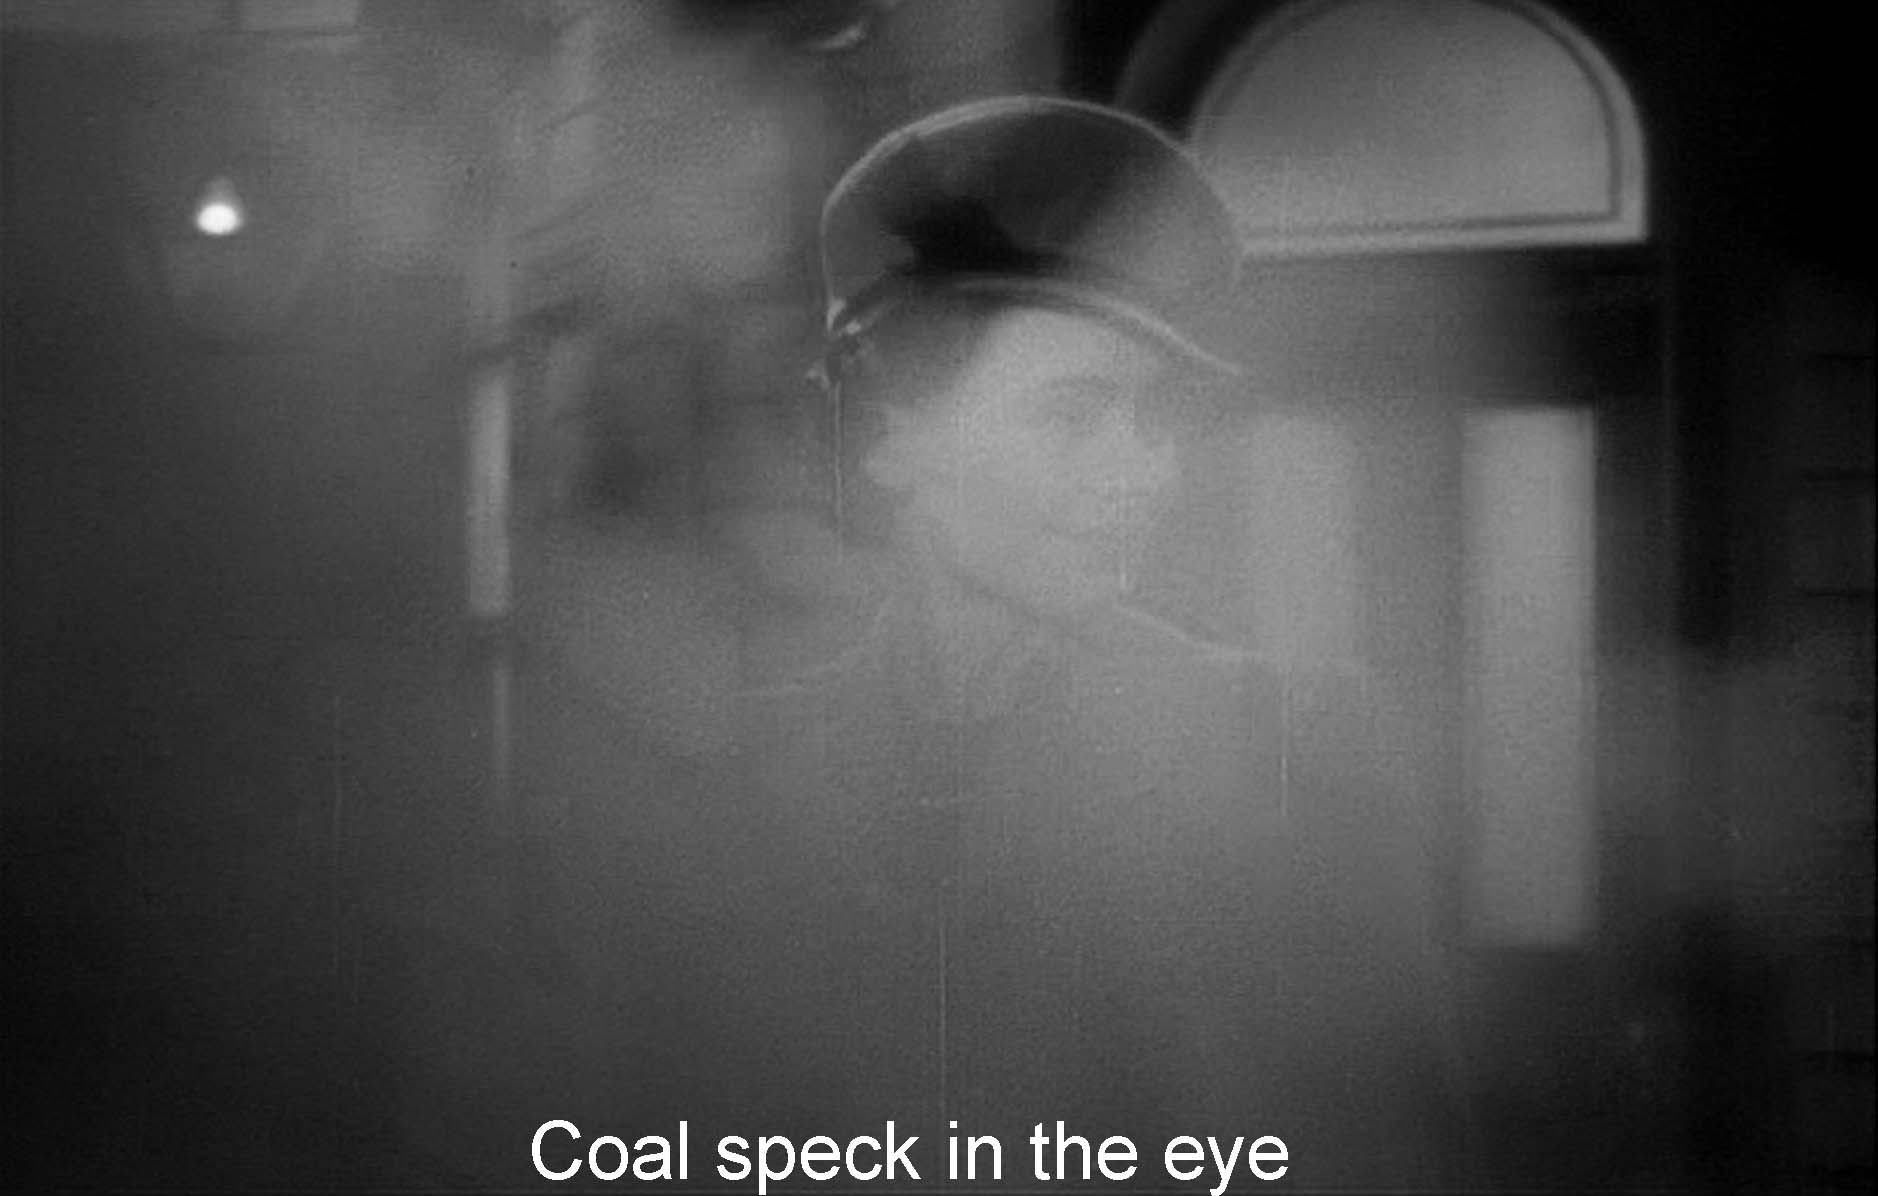 Coal speck in the eye